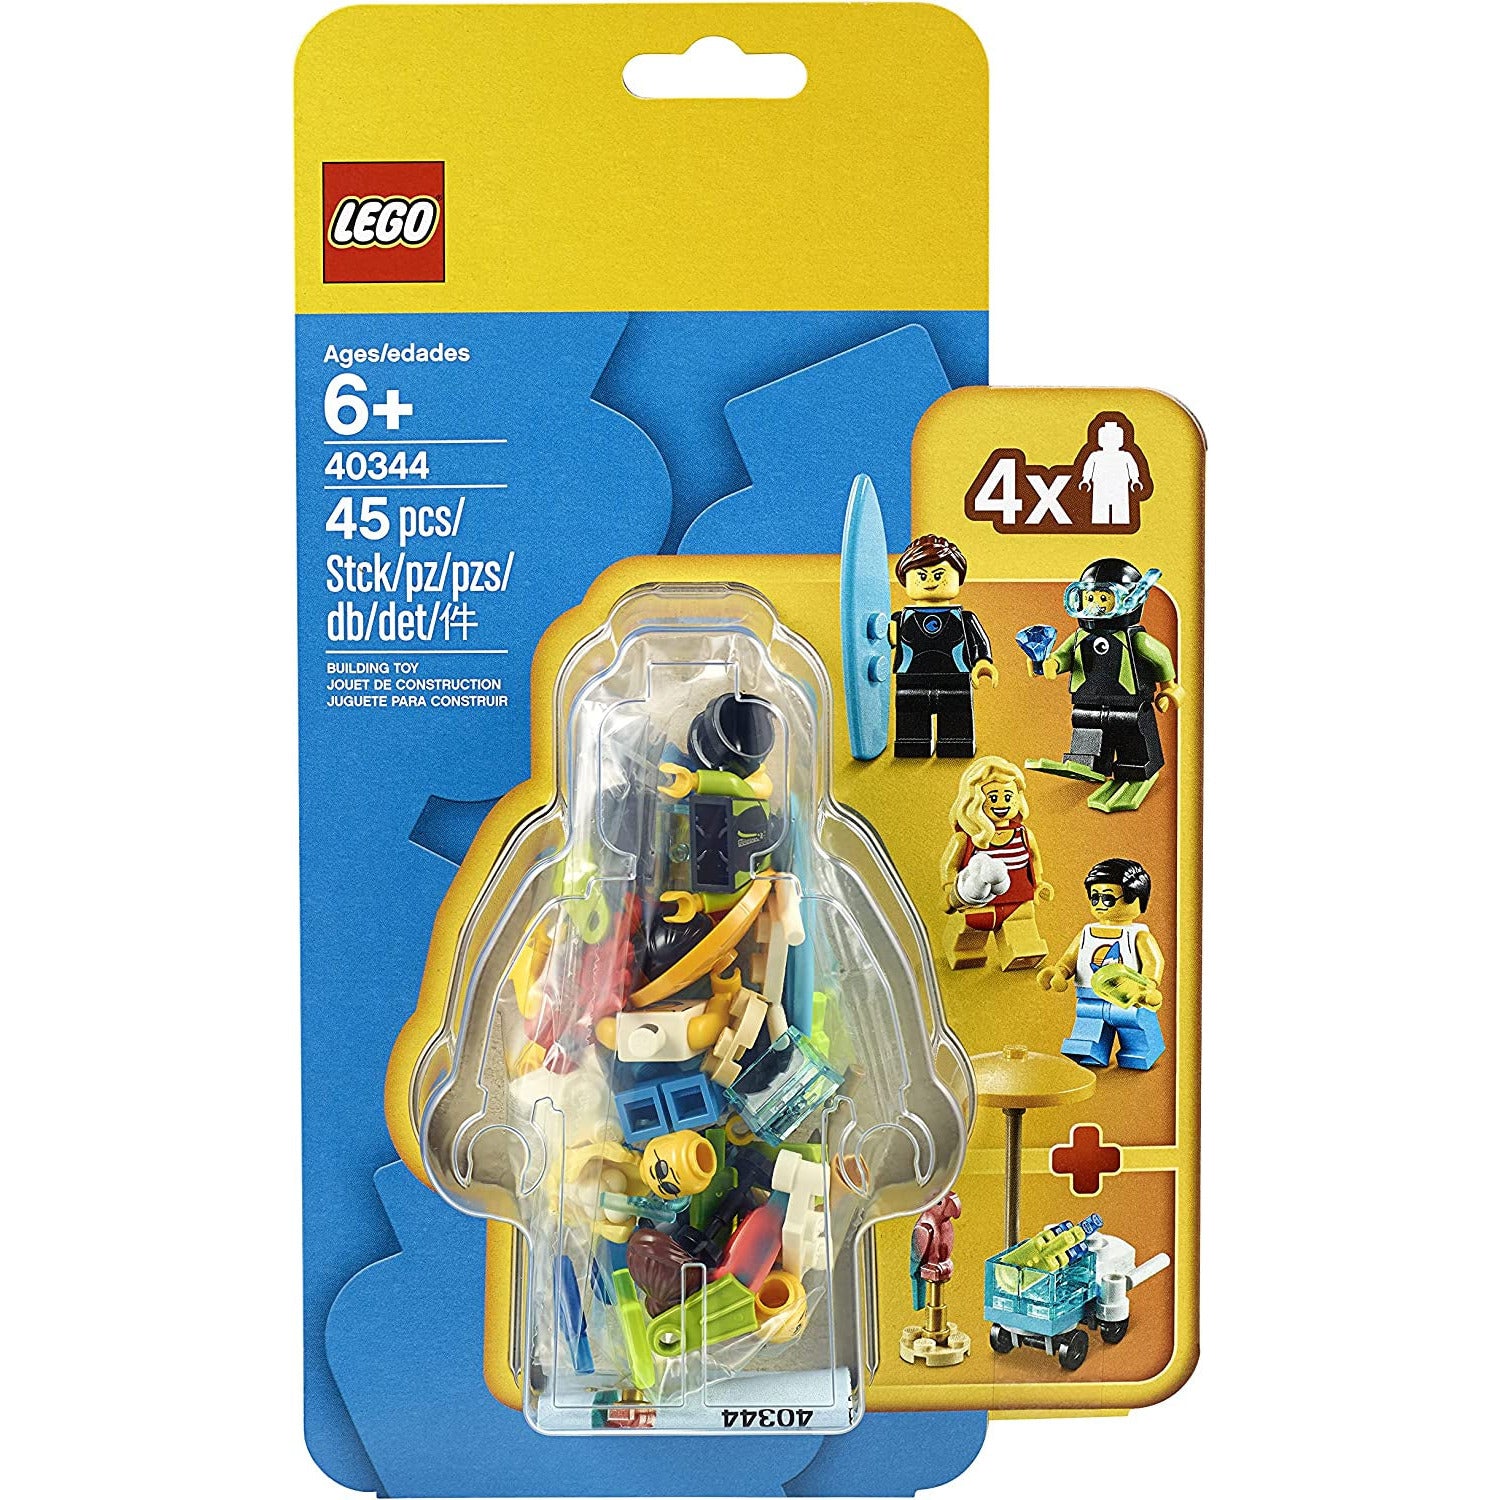 Lego Collectible Minifigure: Summer Celebration 40344